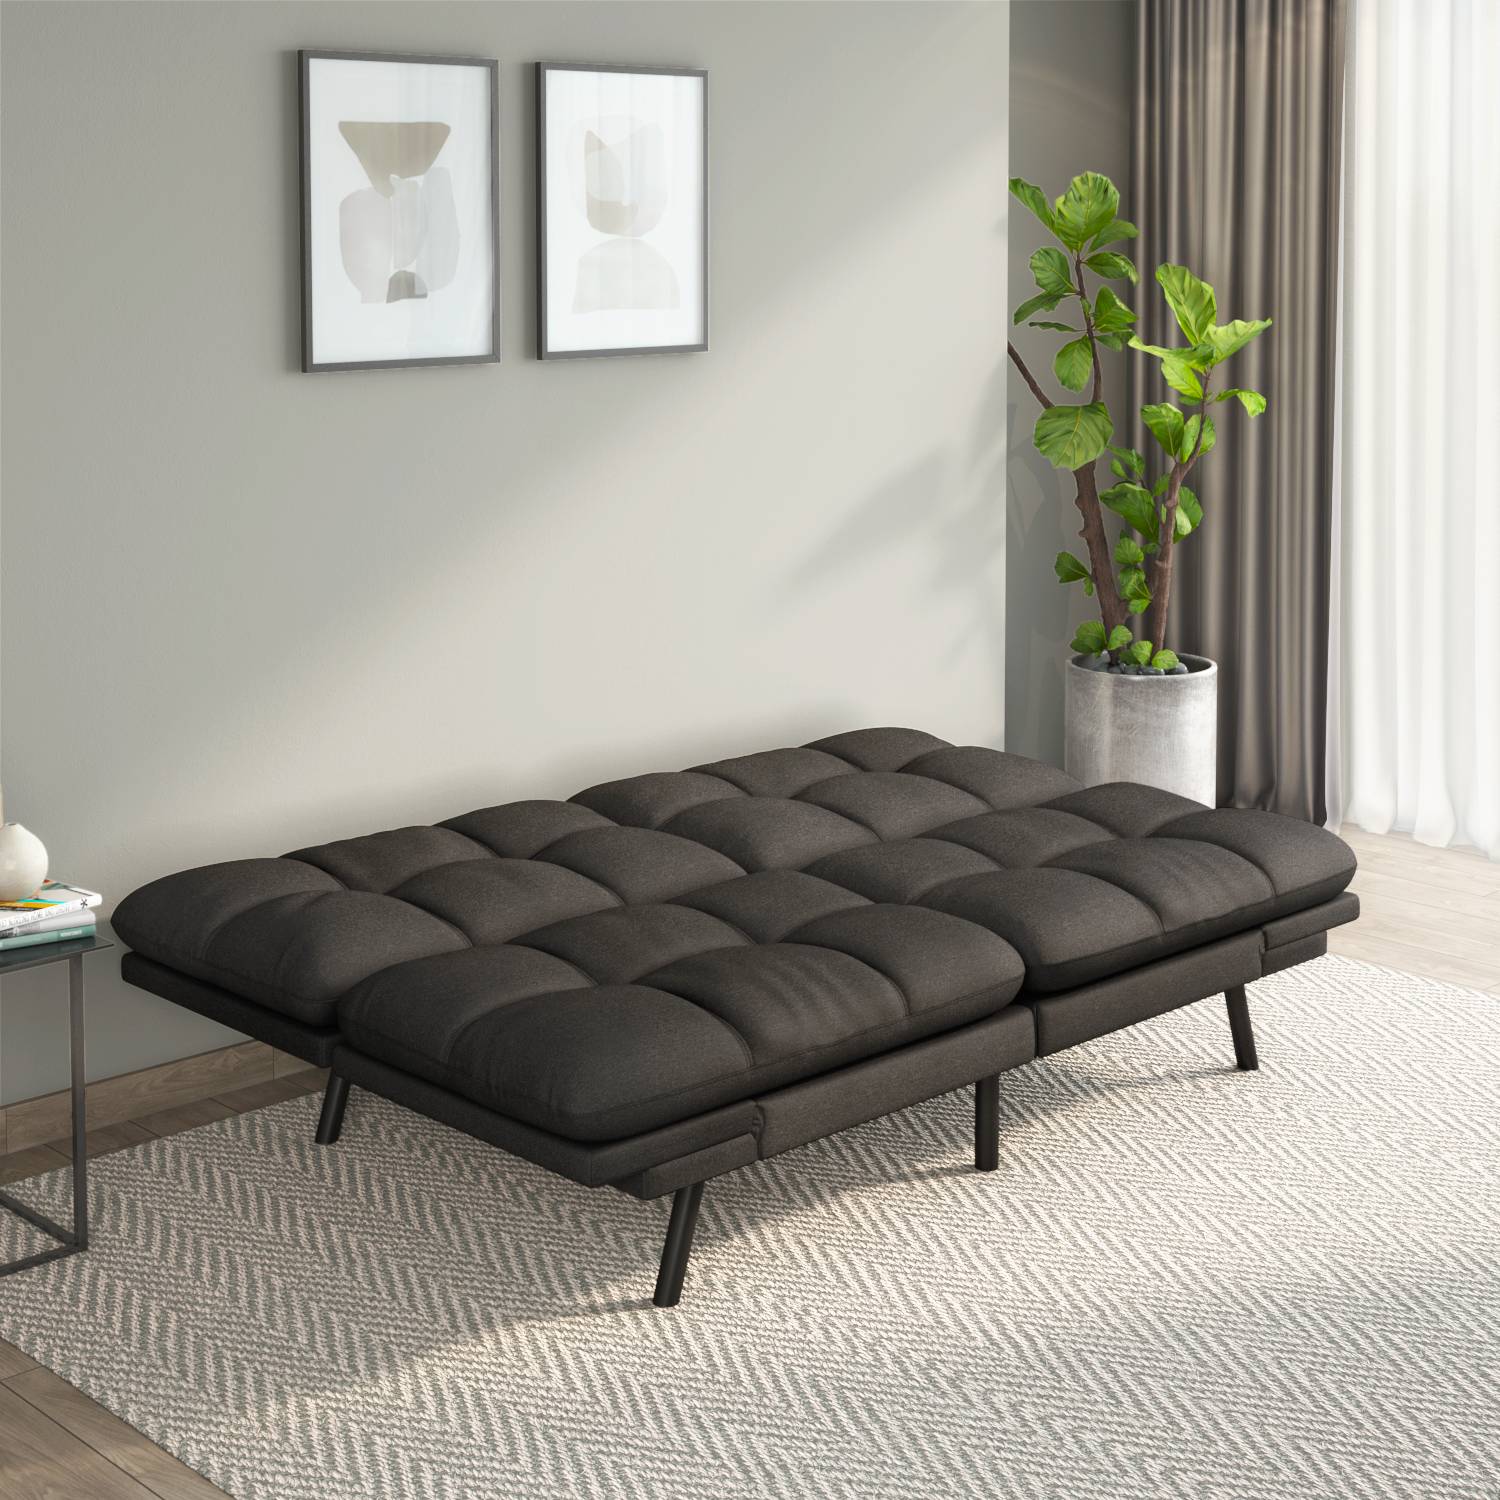 Nilkamal Oberon 3 Seater Futon Sofa Cum Bed (Dark Grey)